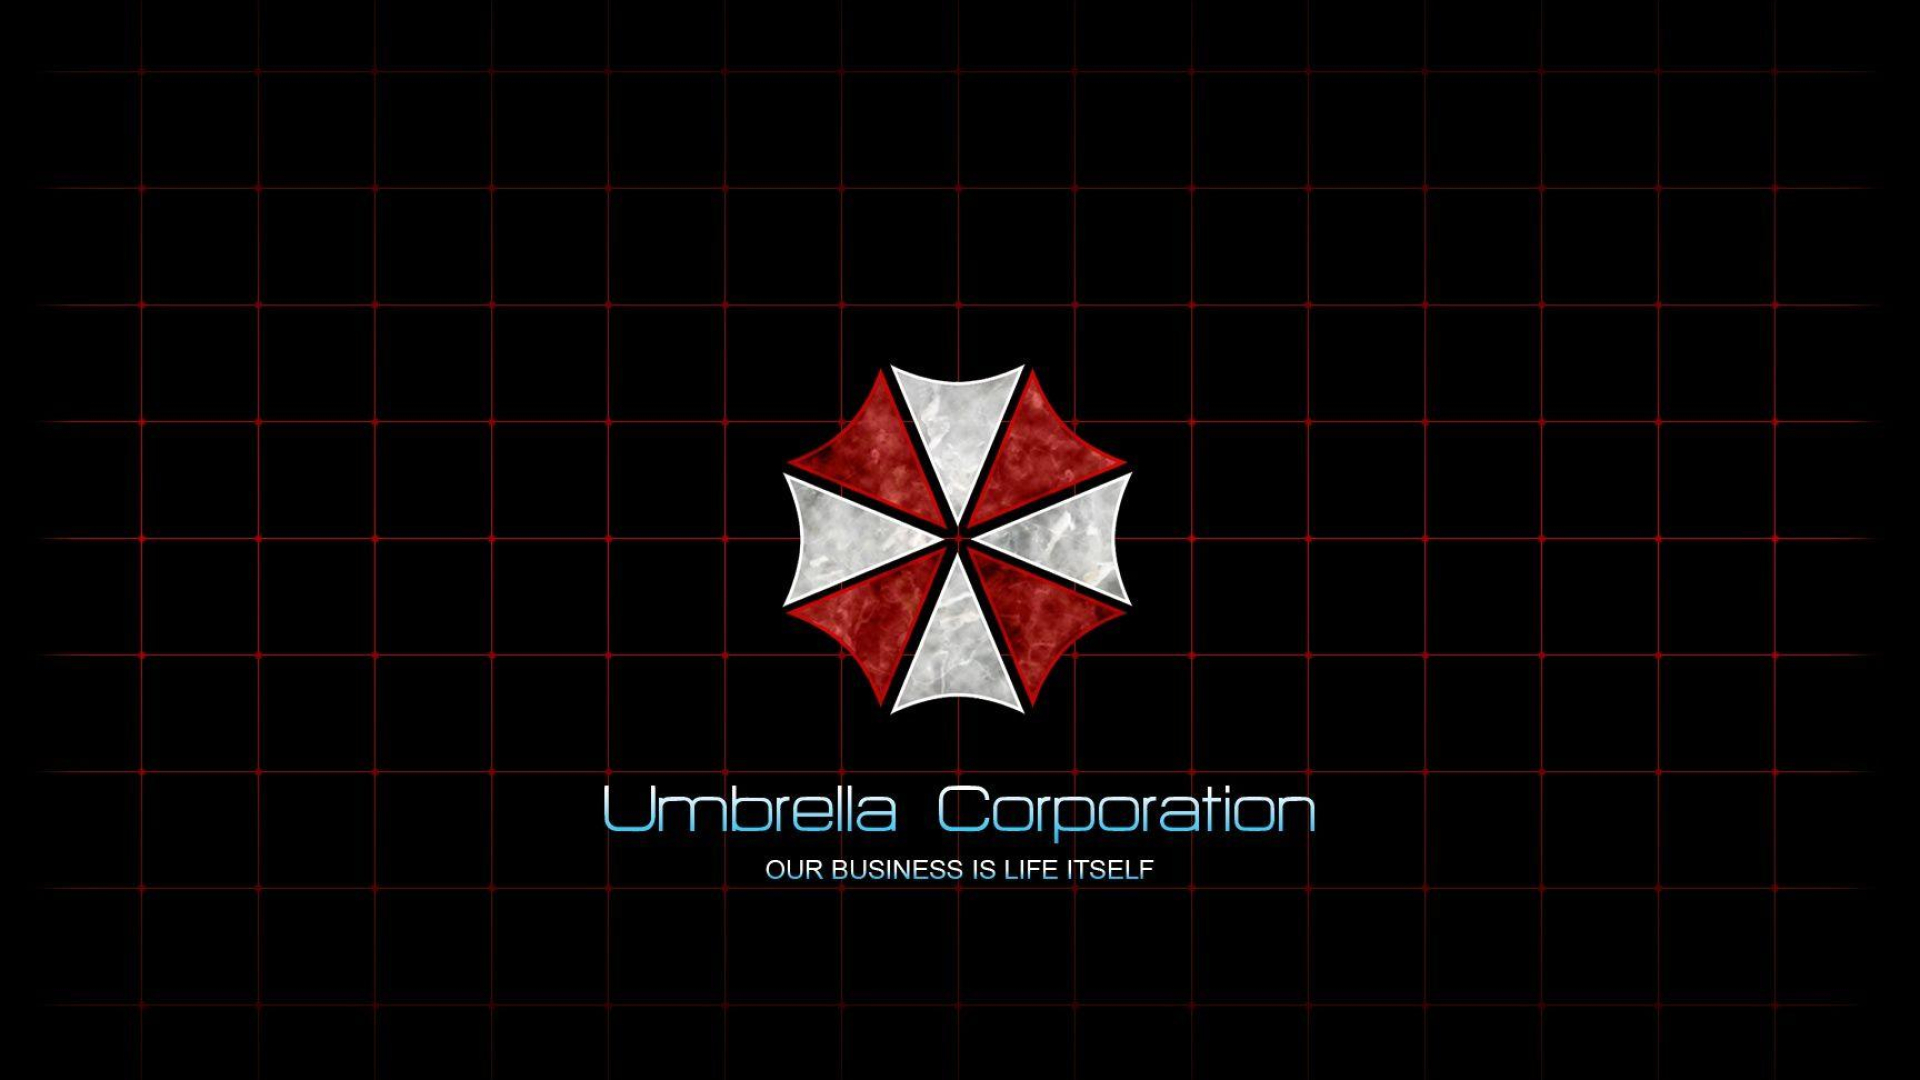 1920x1080 Umbrella Corporation Login Wallpapers Top Free Umbrella Corporation Login Backgrounds